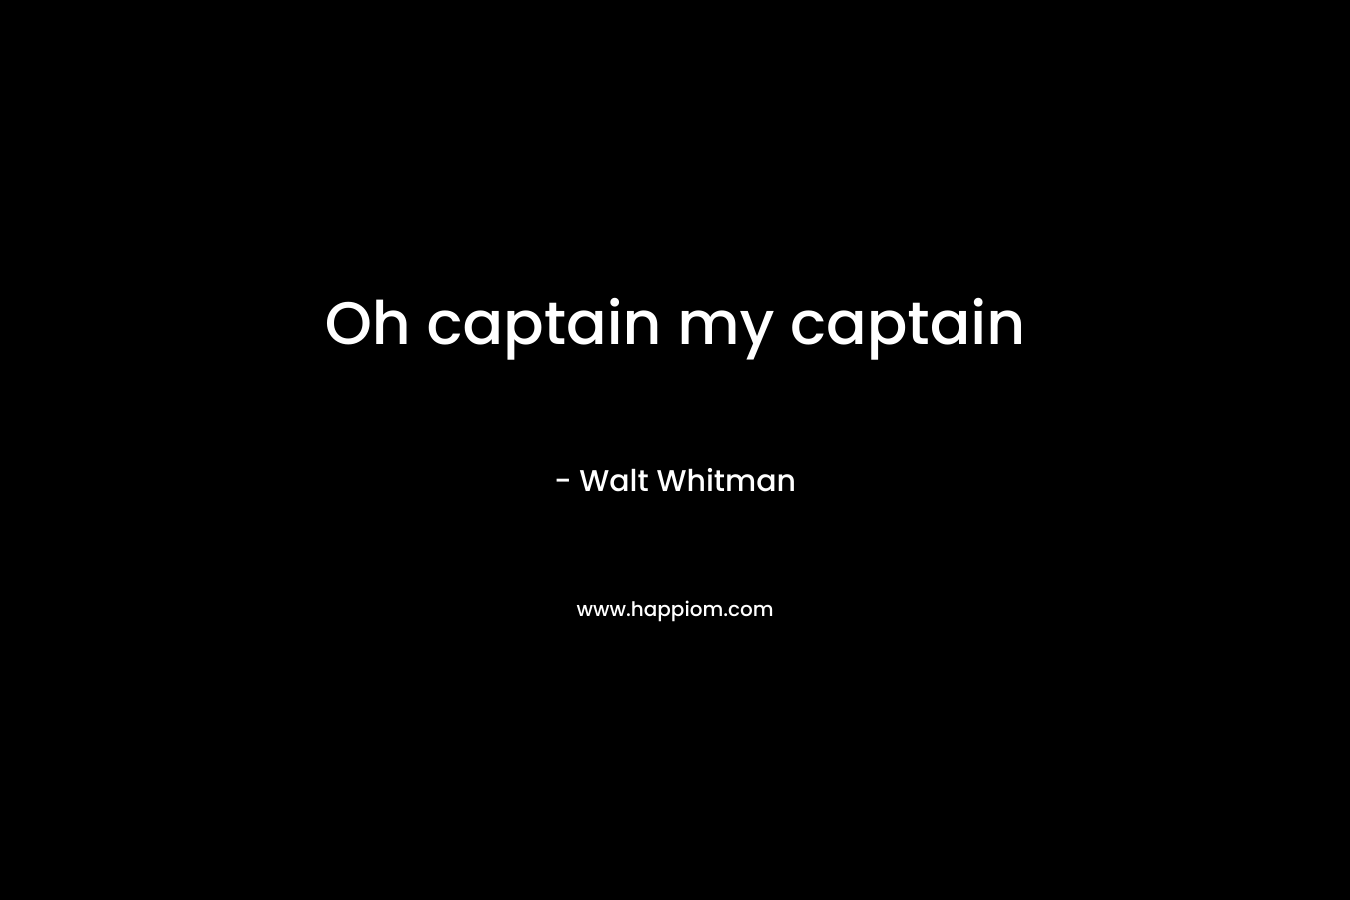 Oh captain my captain